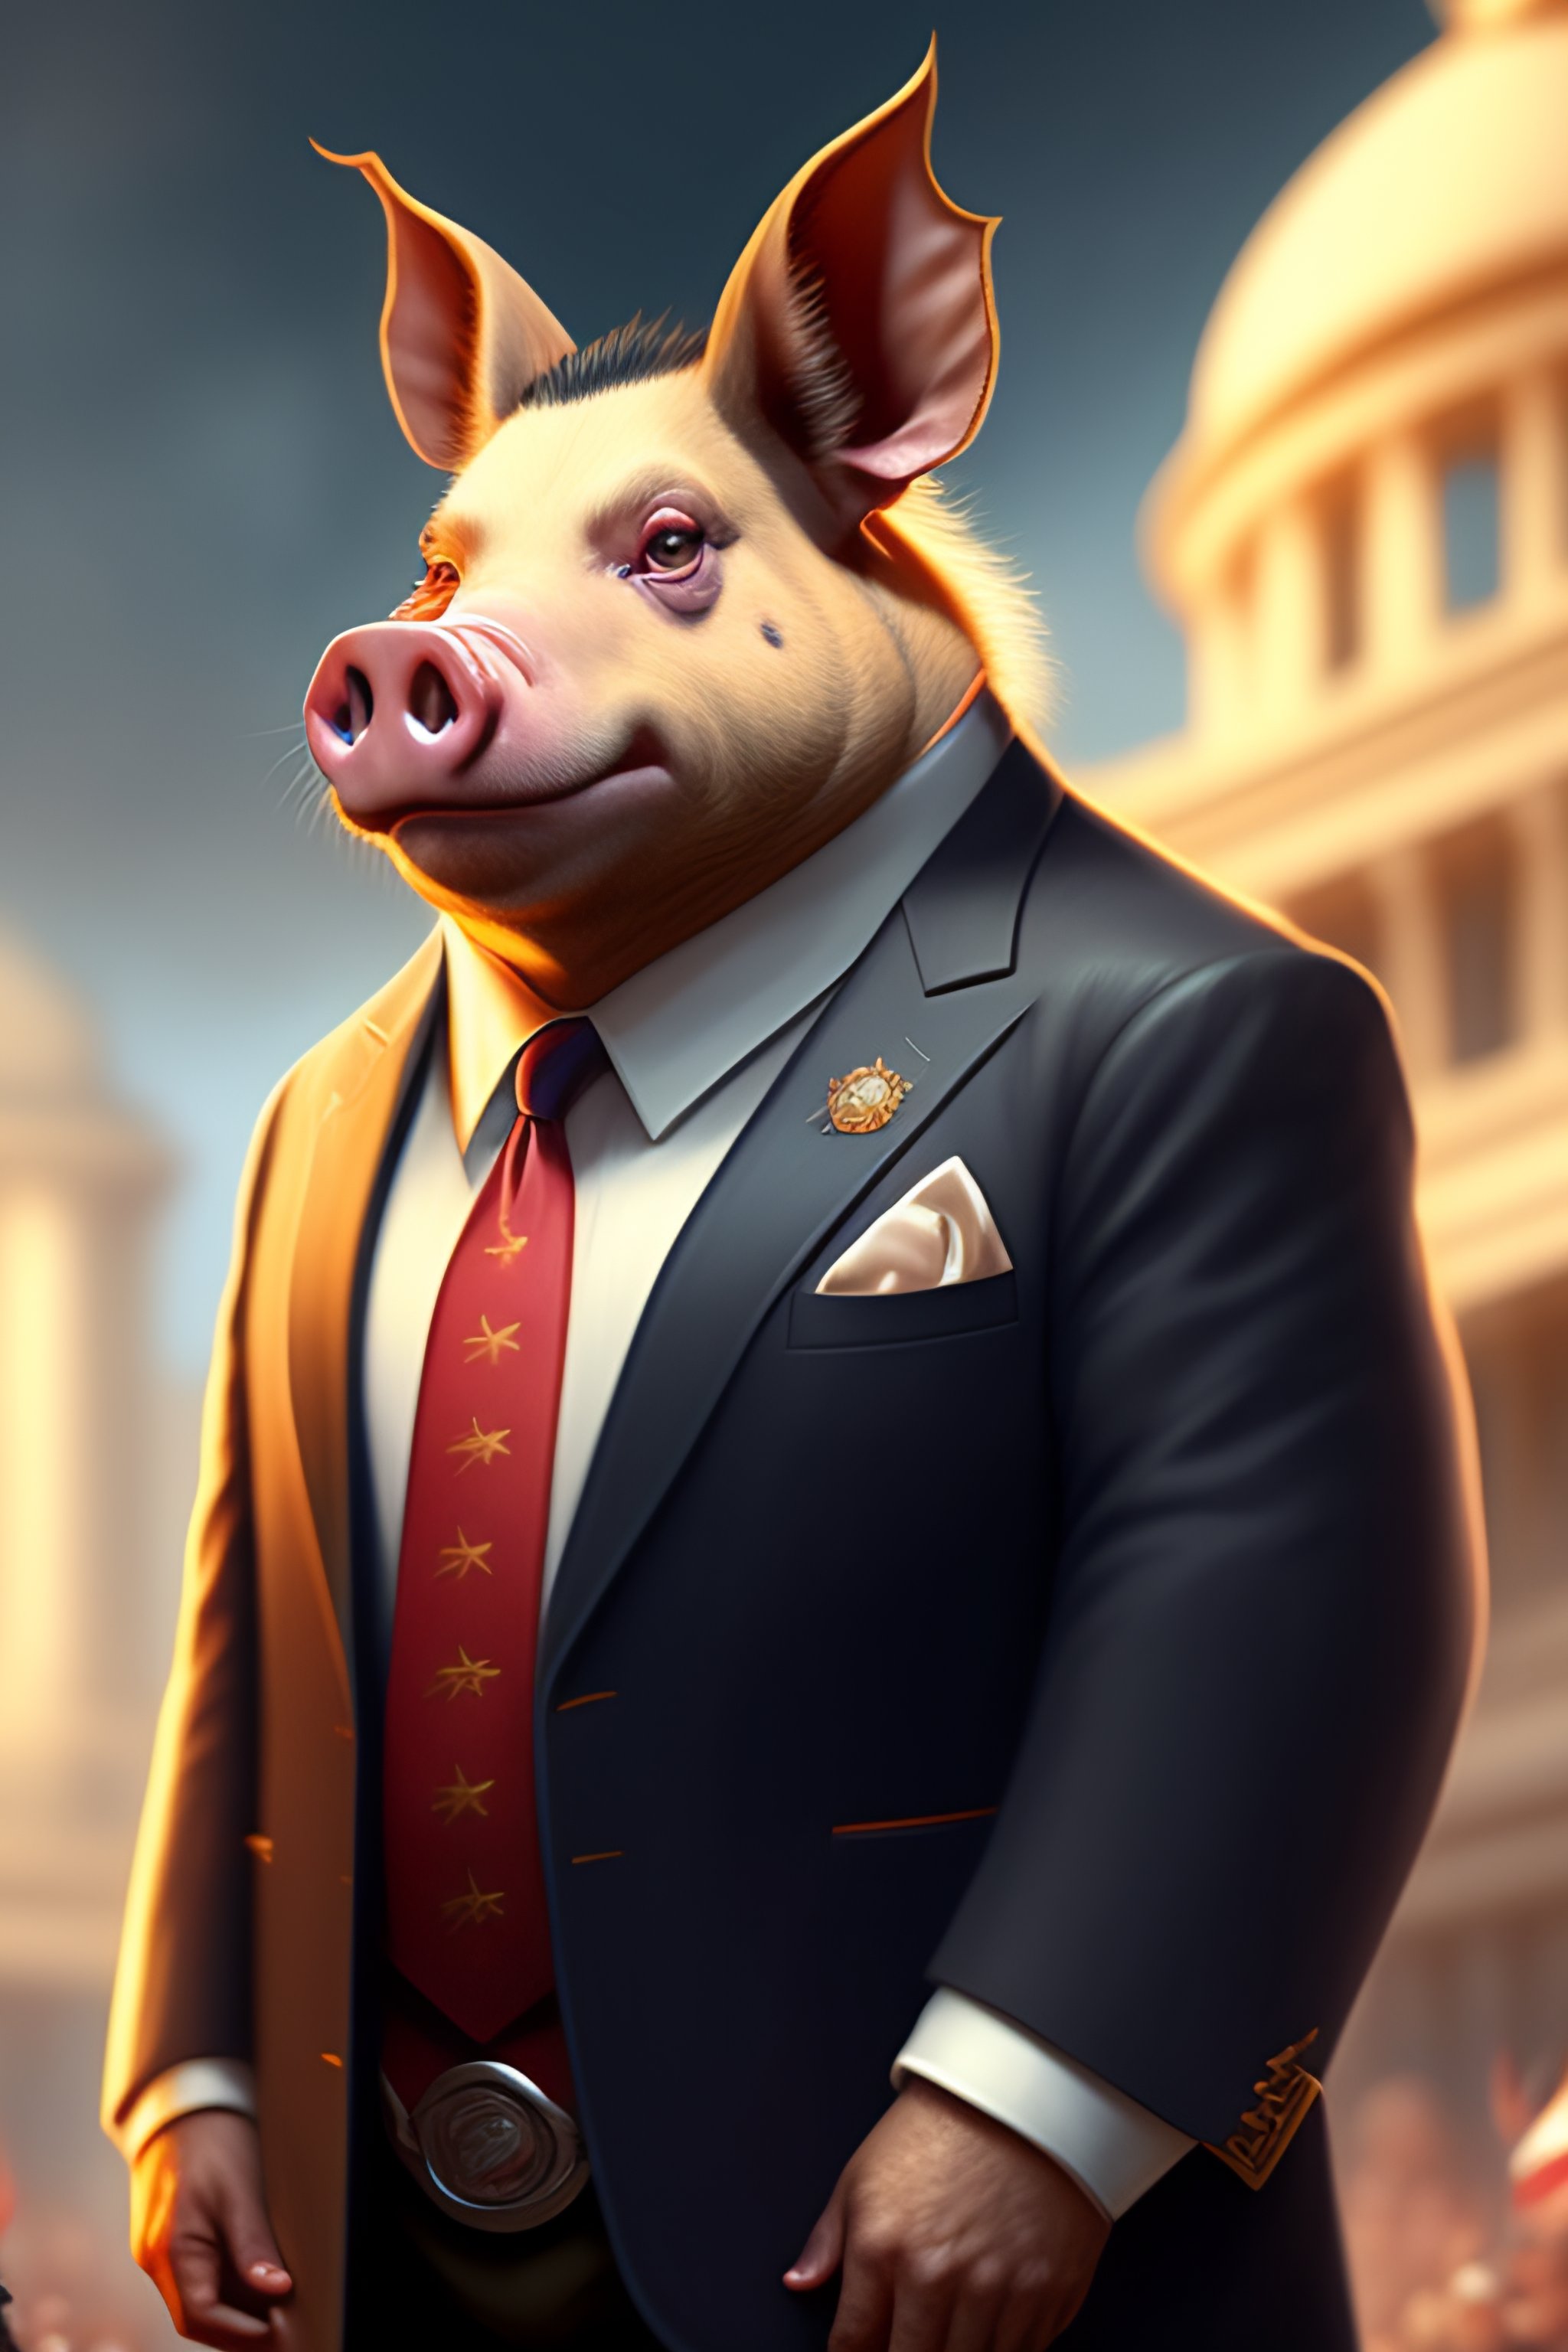 evil cartoon pig standing up